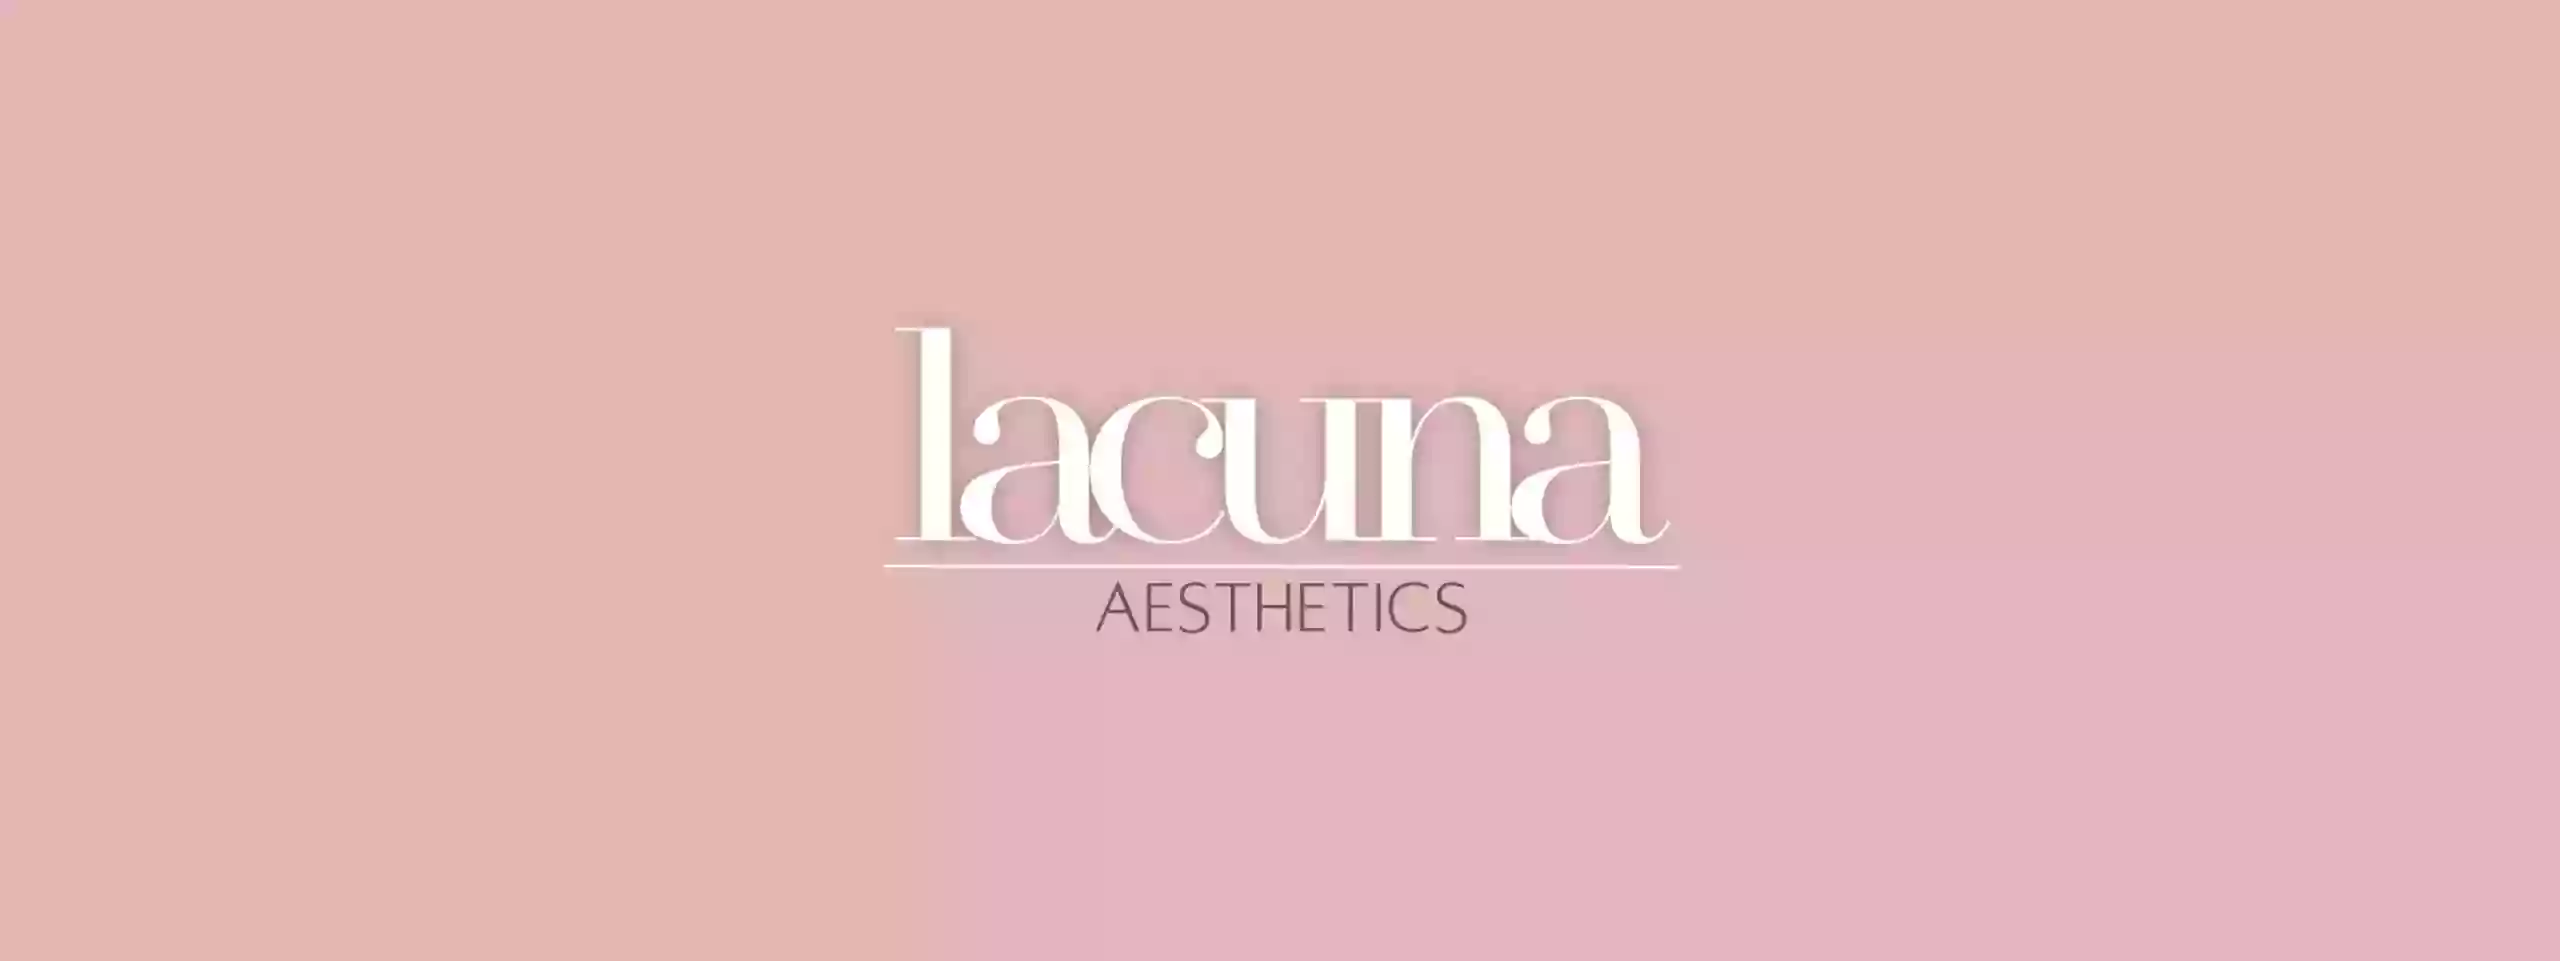 Lacuna Aesthetics